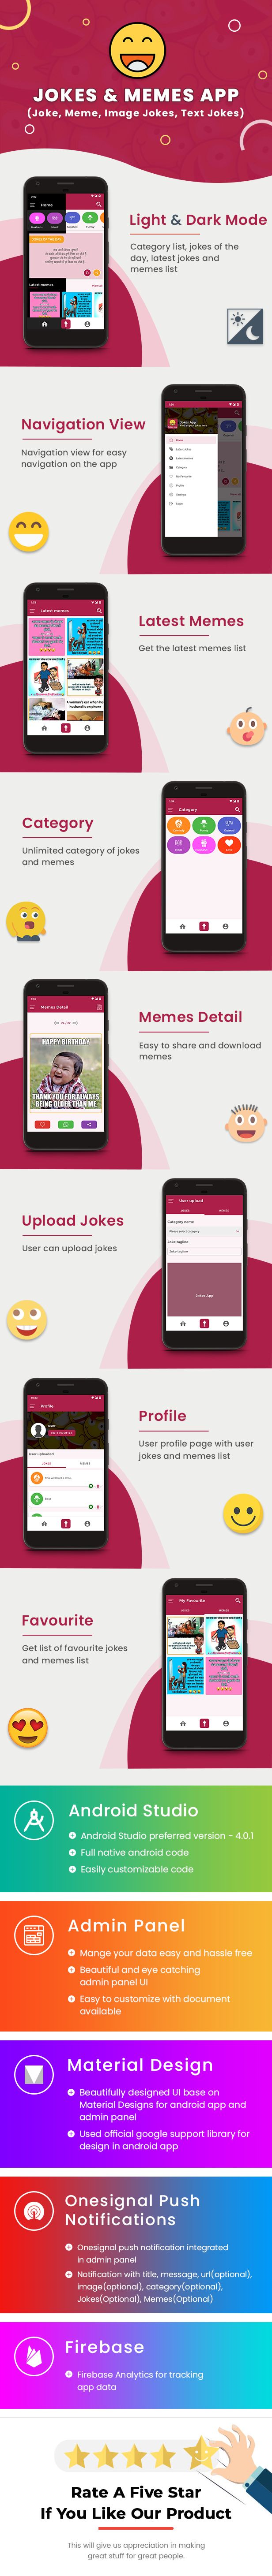 Android Jokes & Memes App (Joke, Meme, Image Jokes, Text Jokes) - 8